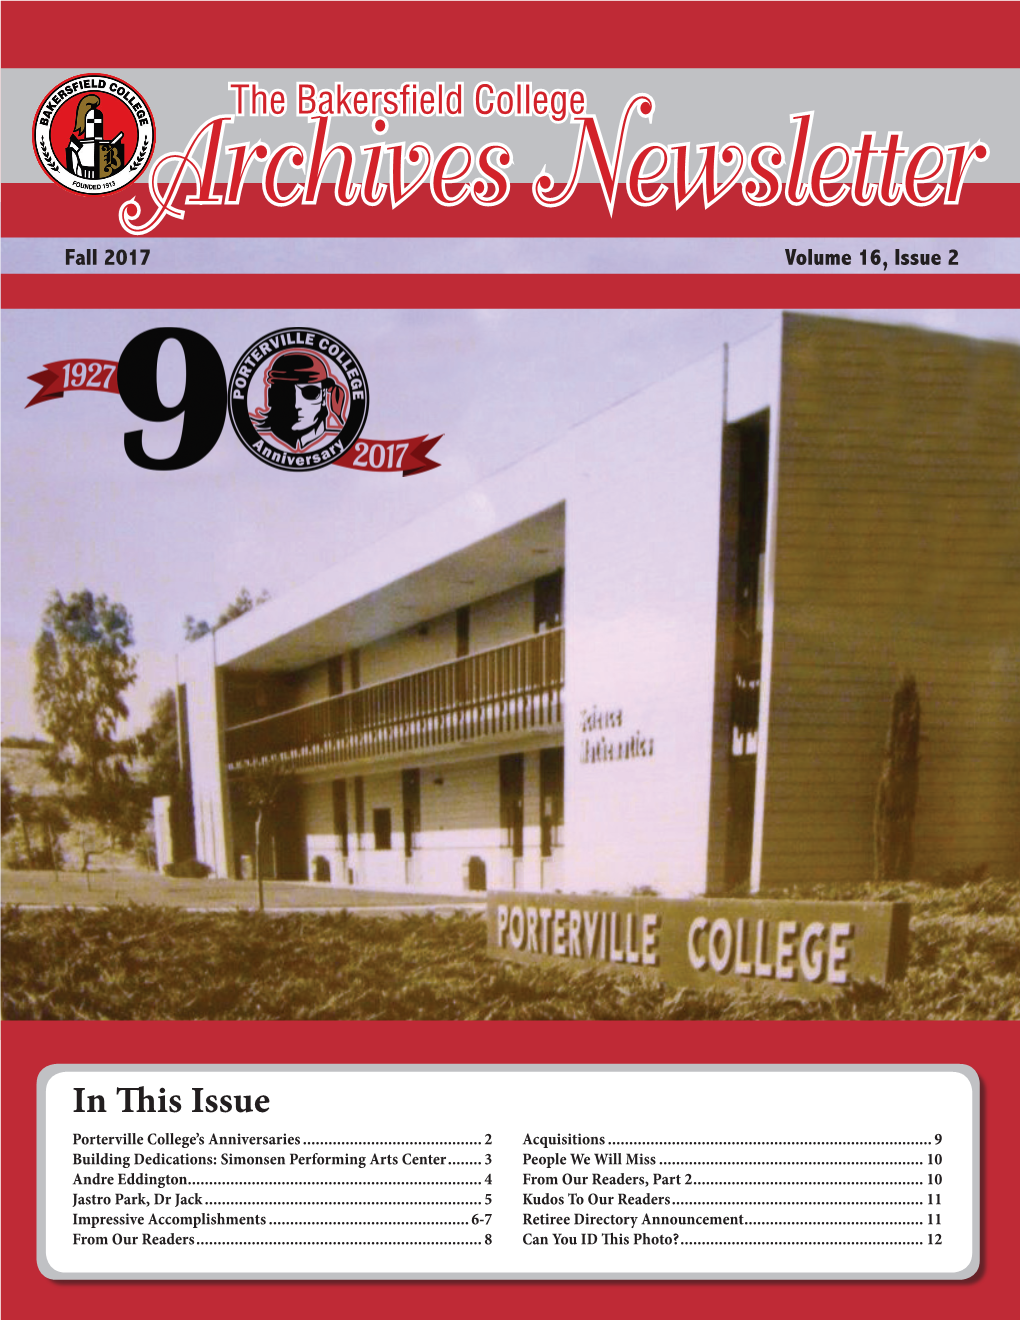 Porterville College's Anniversaries